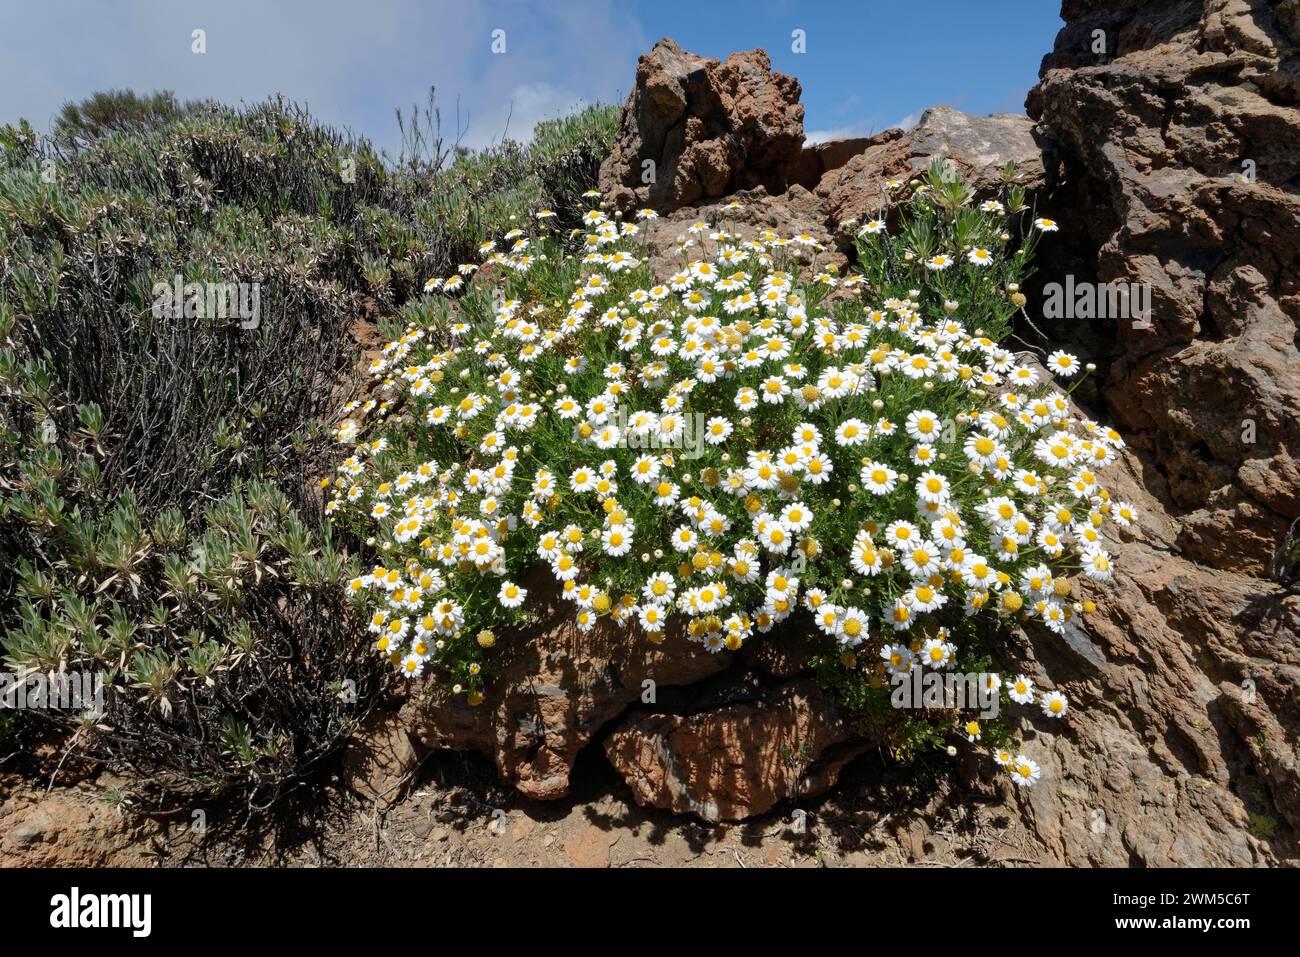 Teide marguerite / Tenerife Daisy (Argyranthemum teneriffae) clump flowering in Teide National Park, Tenerife, May. Stock Photo